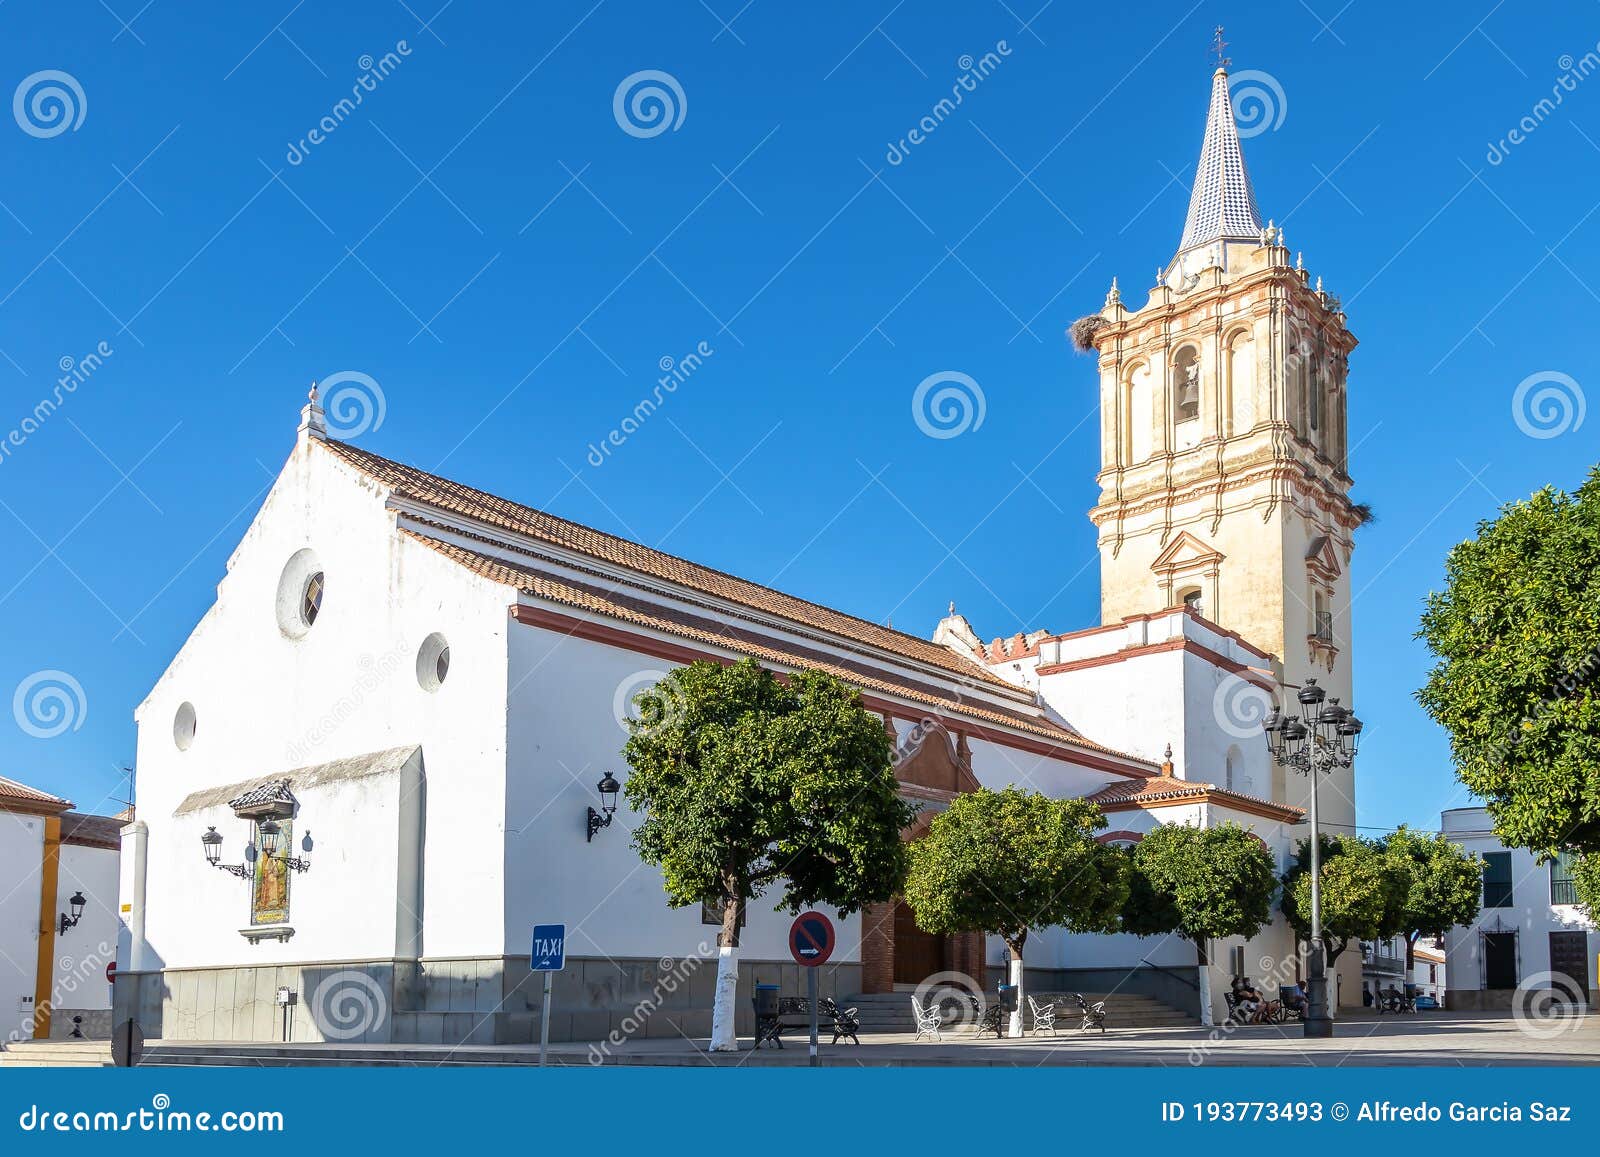 parish of san bartolome apostol in the town of beas, huelva, andalucia, spain